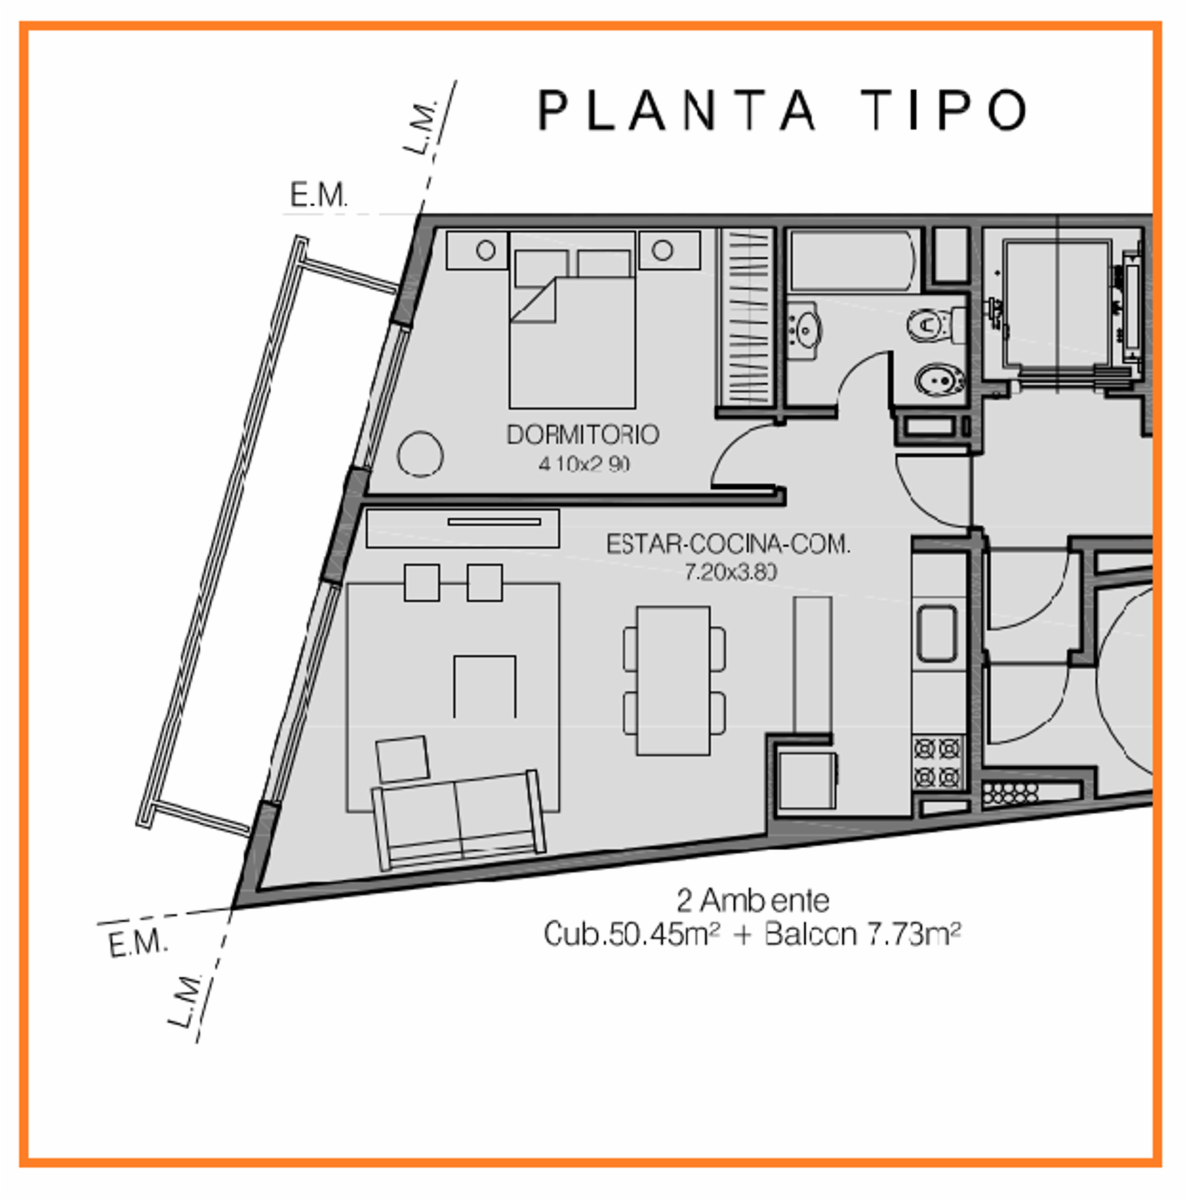 Departamento  de 2 amb - semi piso con Balcón Terraza al frente - 4° A - VENTA en PESOS